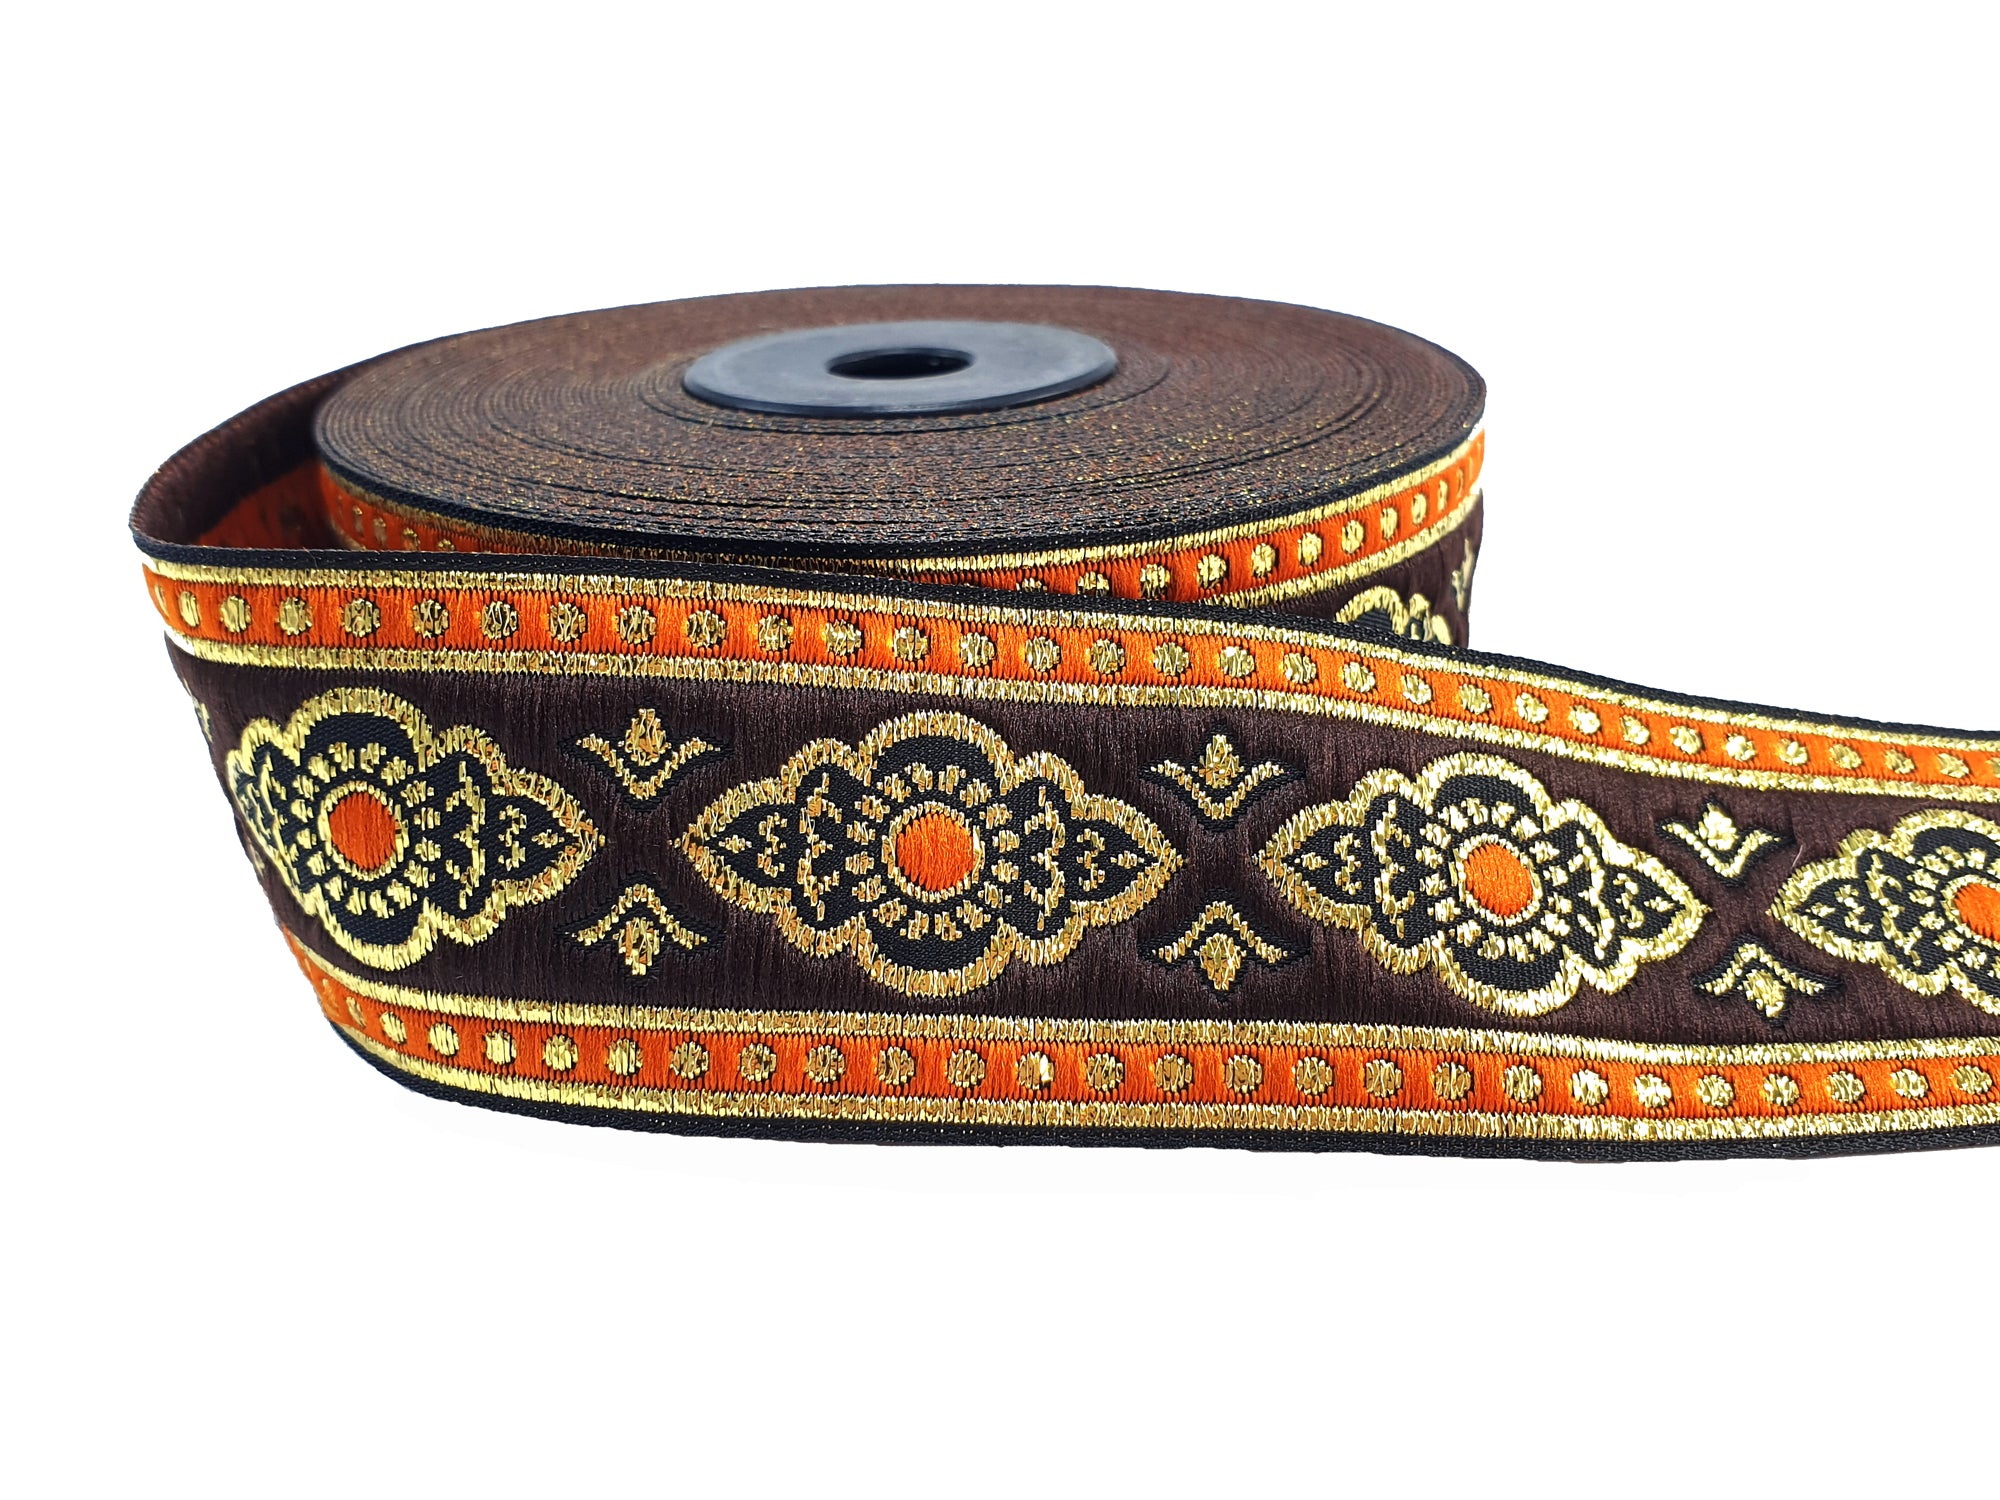  MSCFTFB Ethnic Designs Jacquard Ribbon Woven Fabric